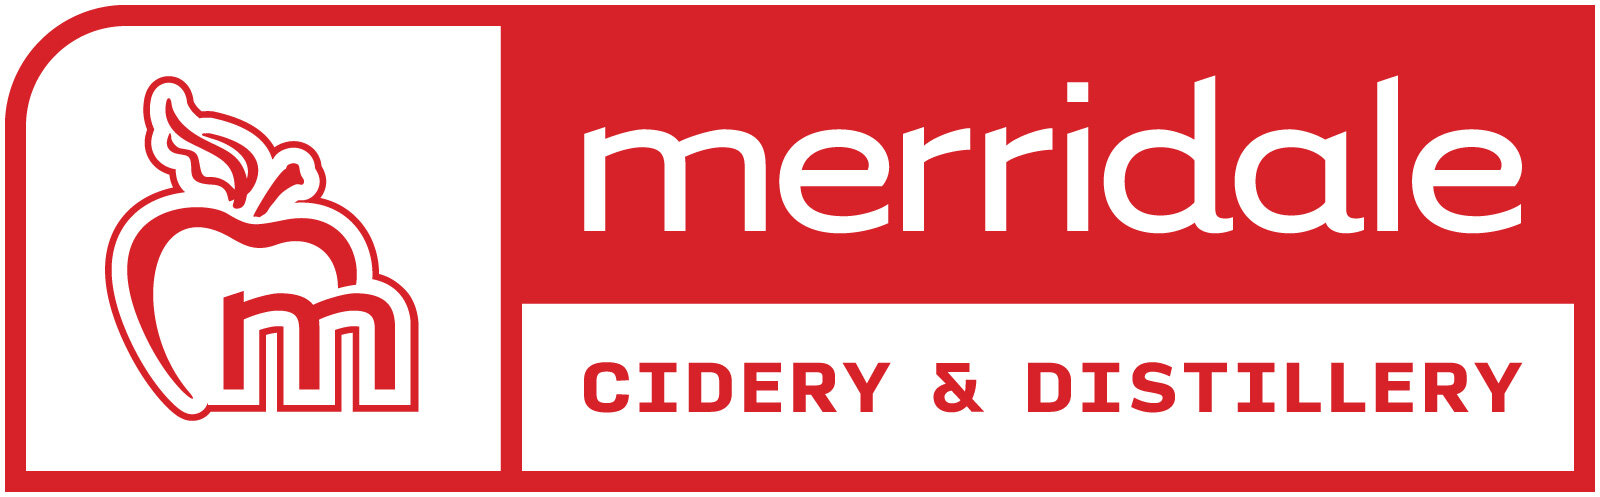 Merridale-Cidery-and-Distillery_Logo_RGB_RED.jpg